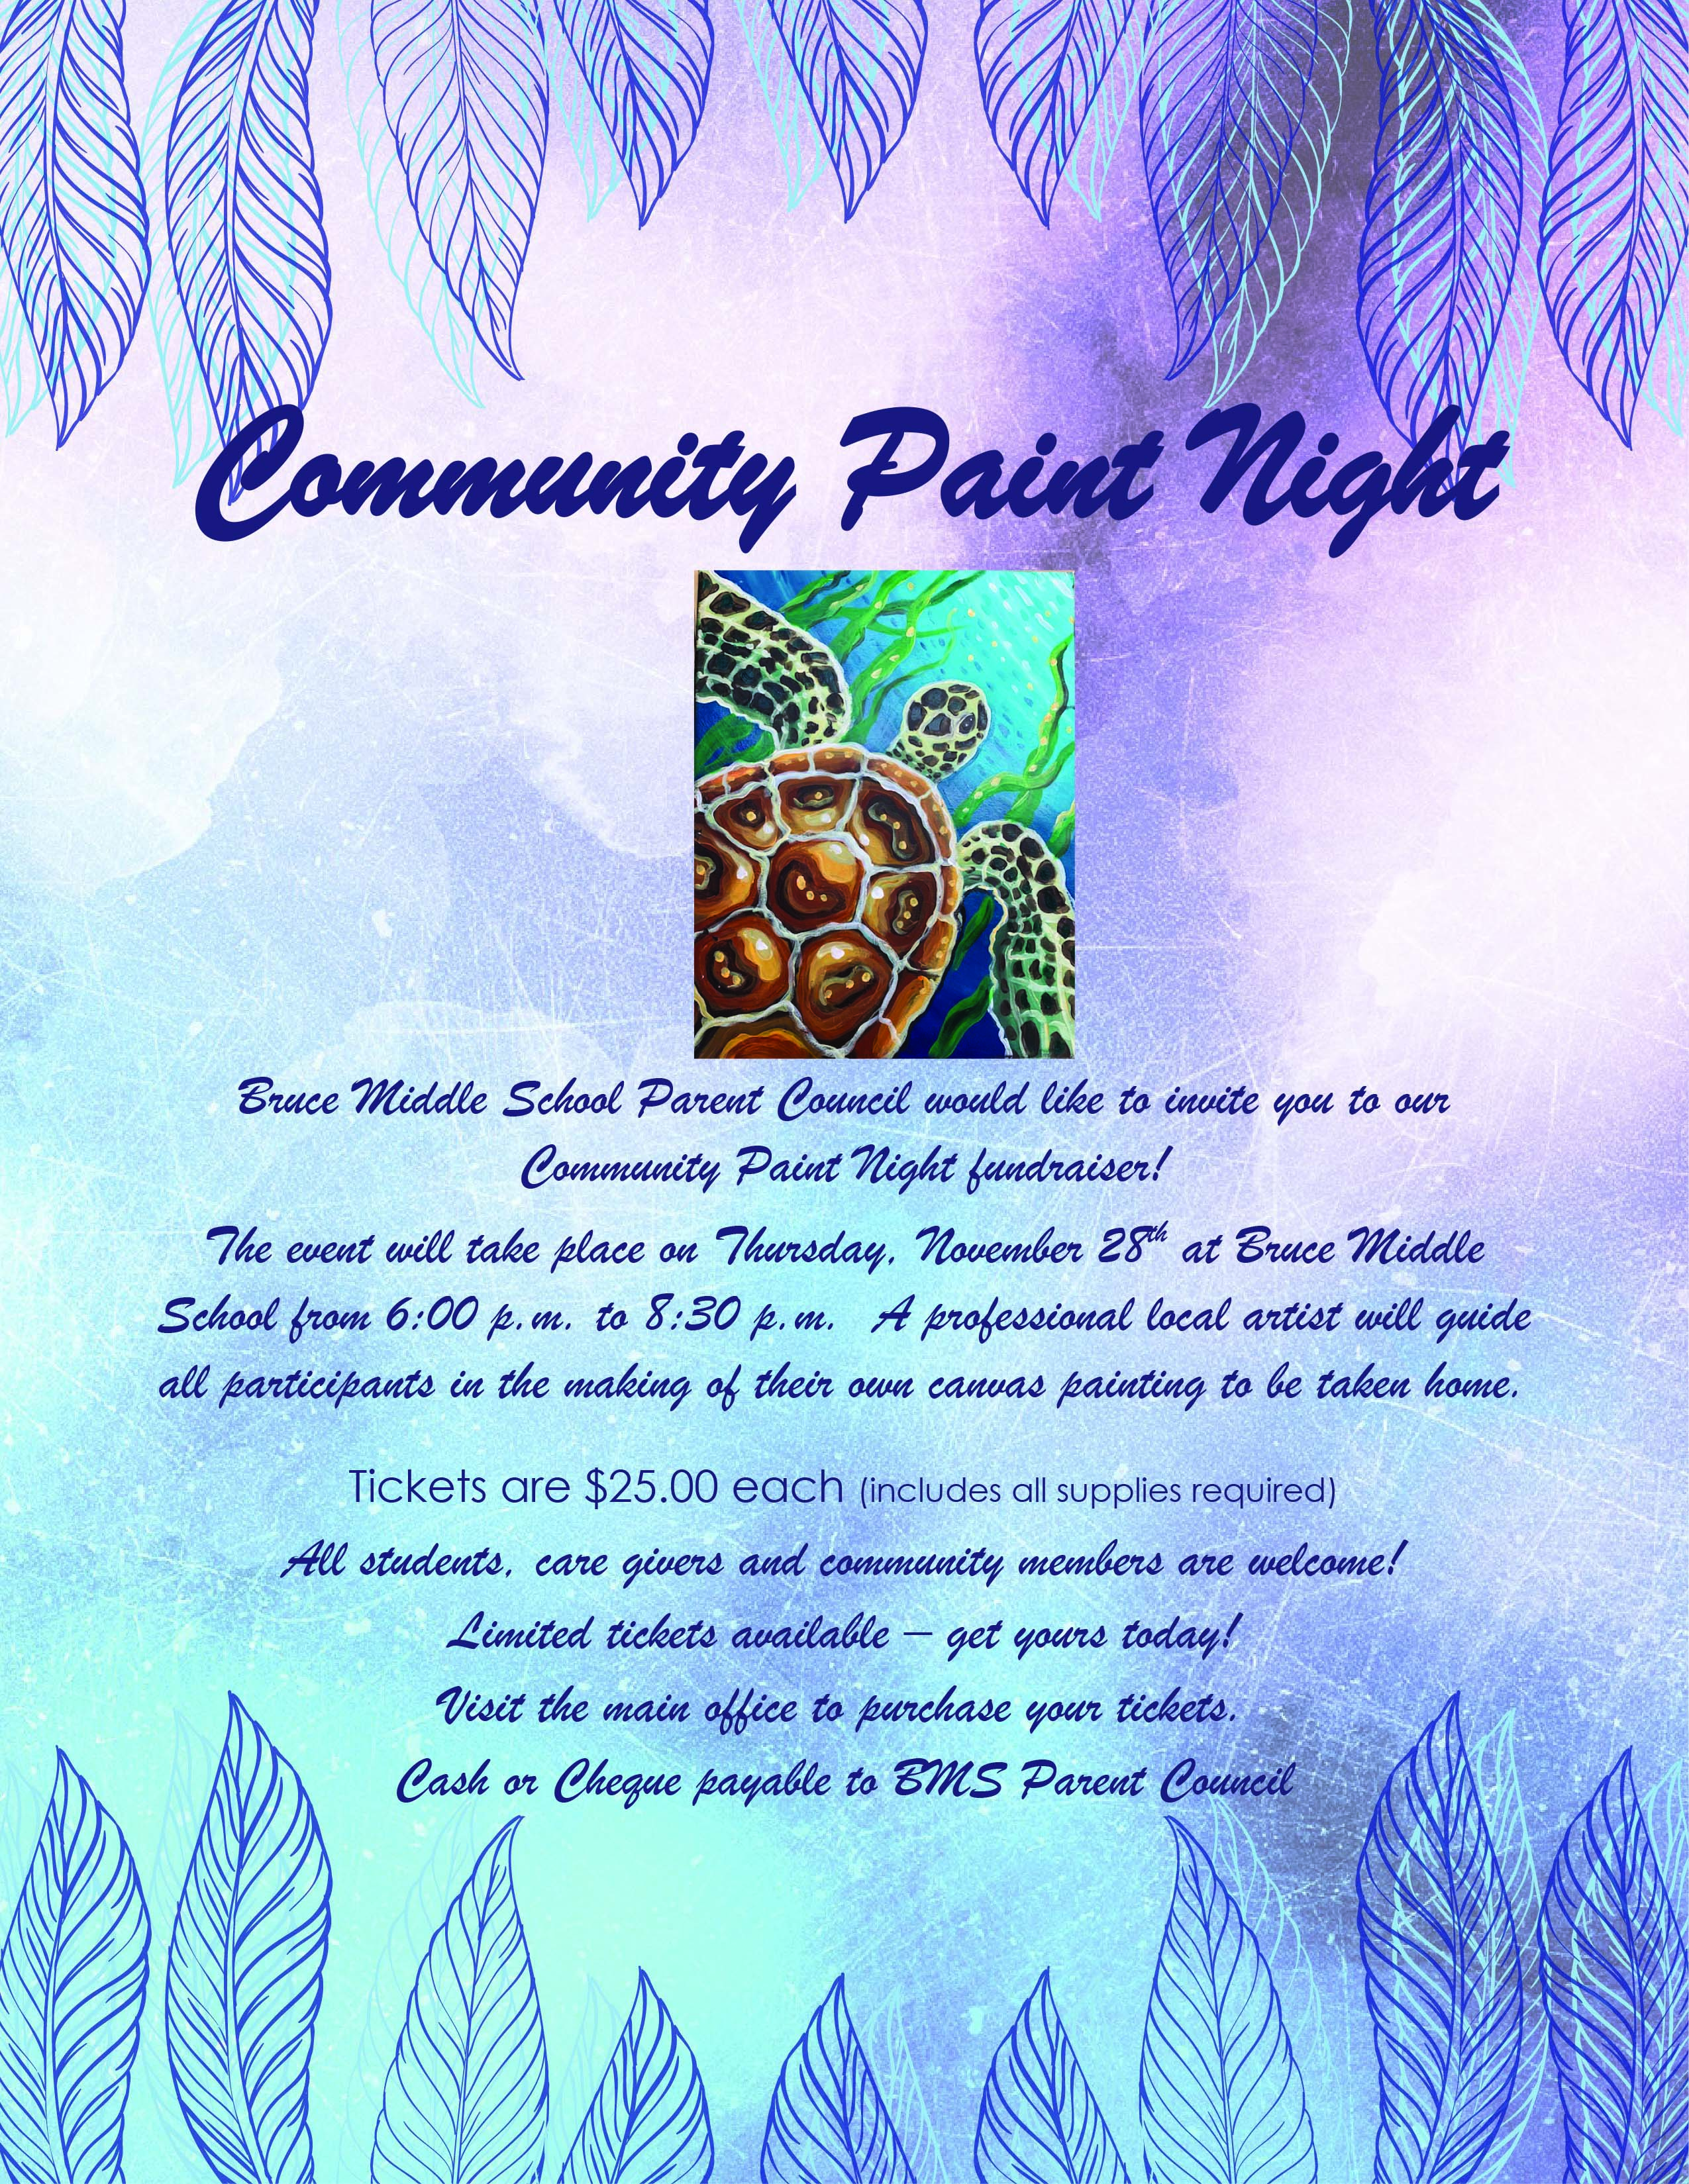 Community Paint Night Poster.jpg